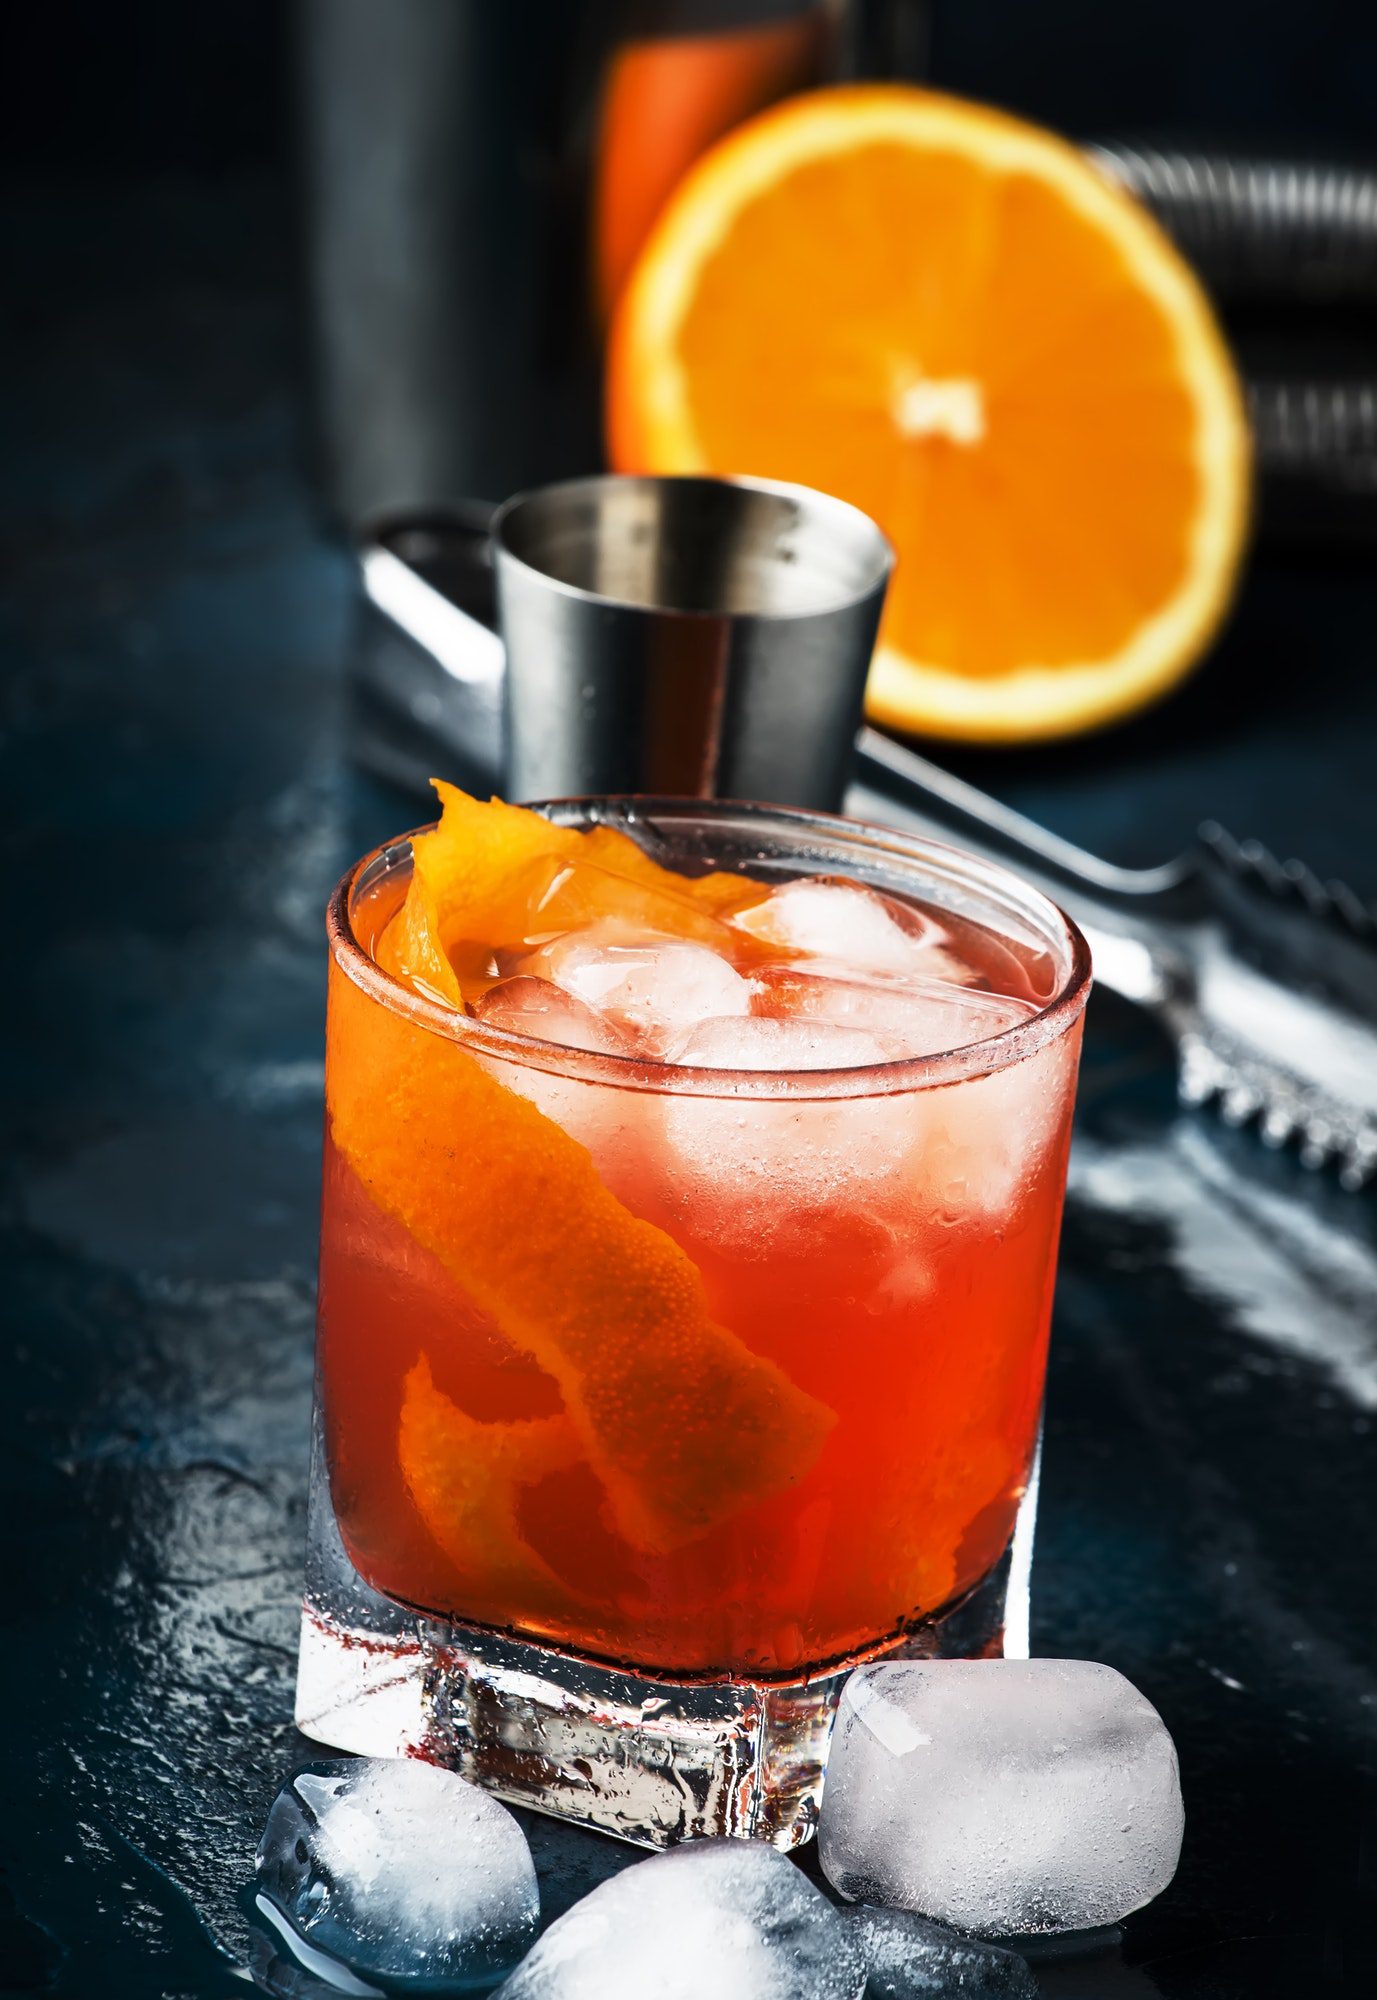 Garibaldi alcoholic cocktail with red bitter, orange juice, zest and ice